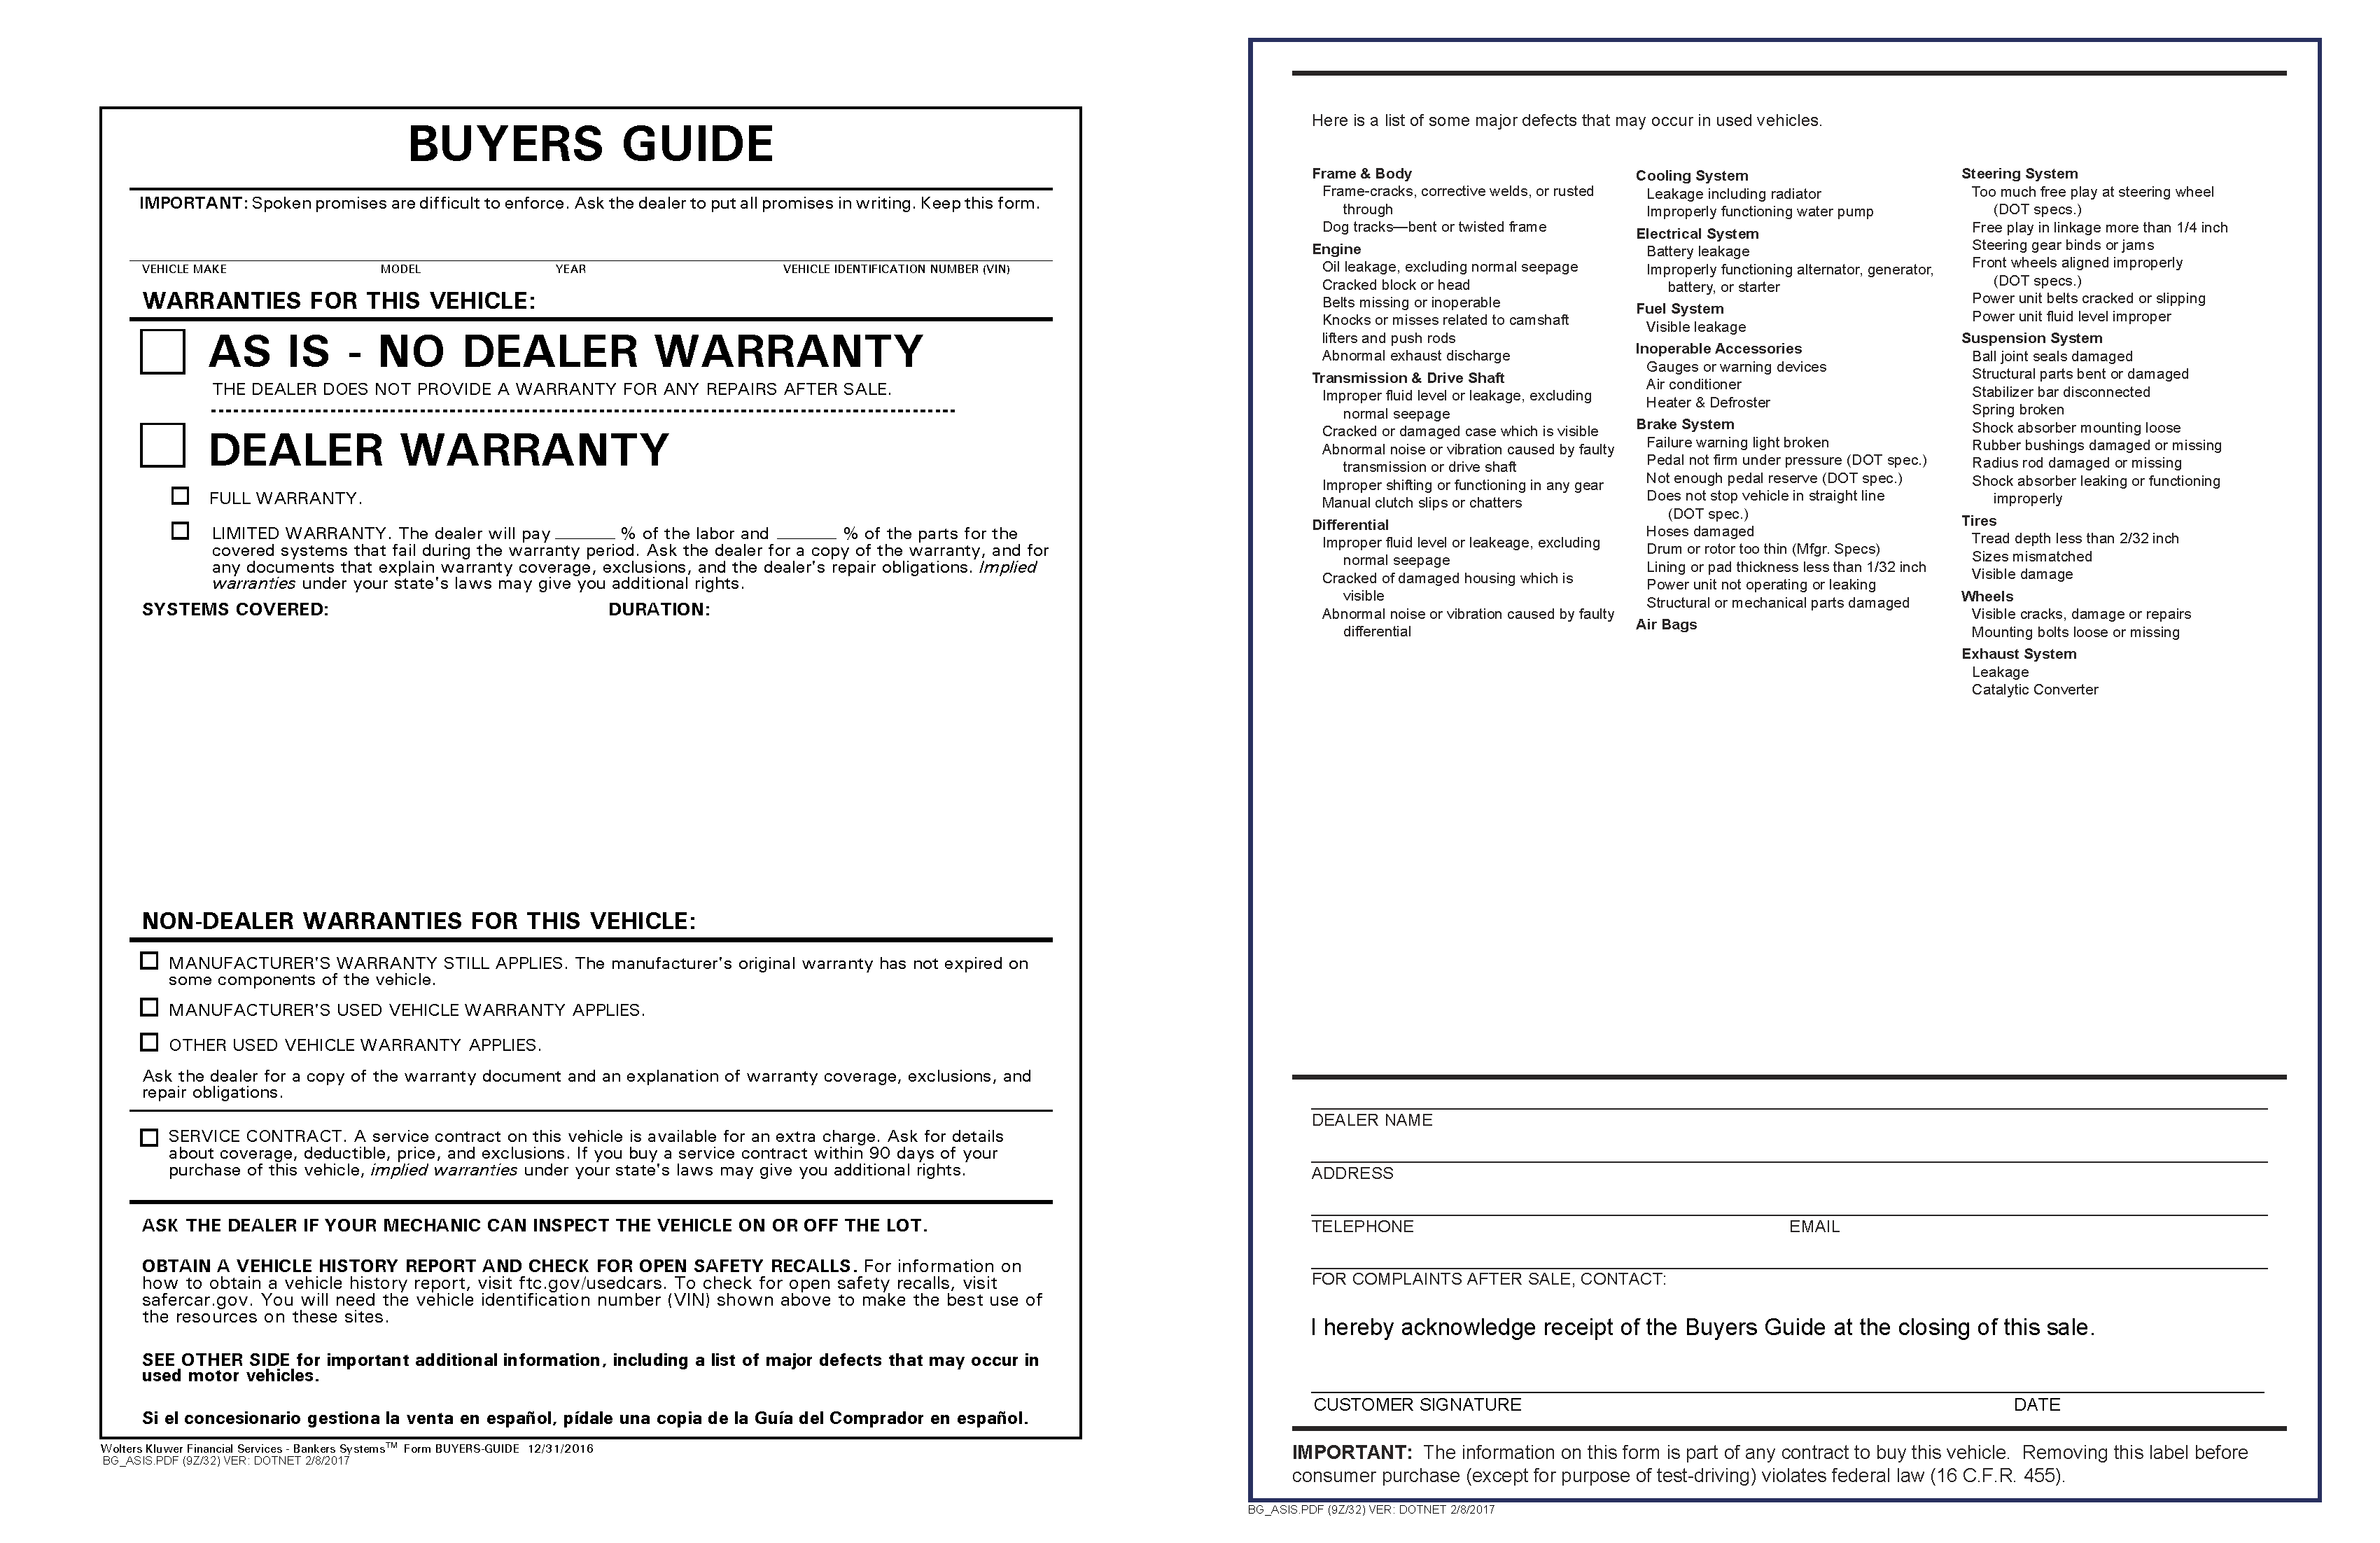 Buyers Guide As-Is No Warranty